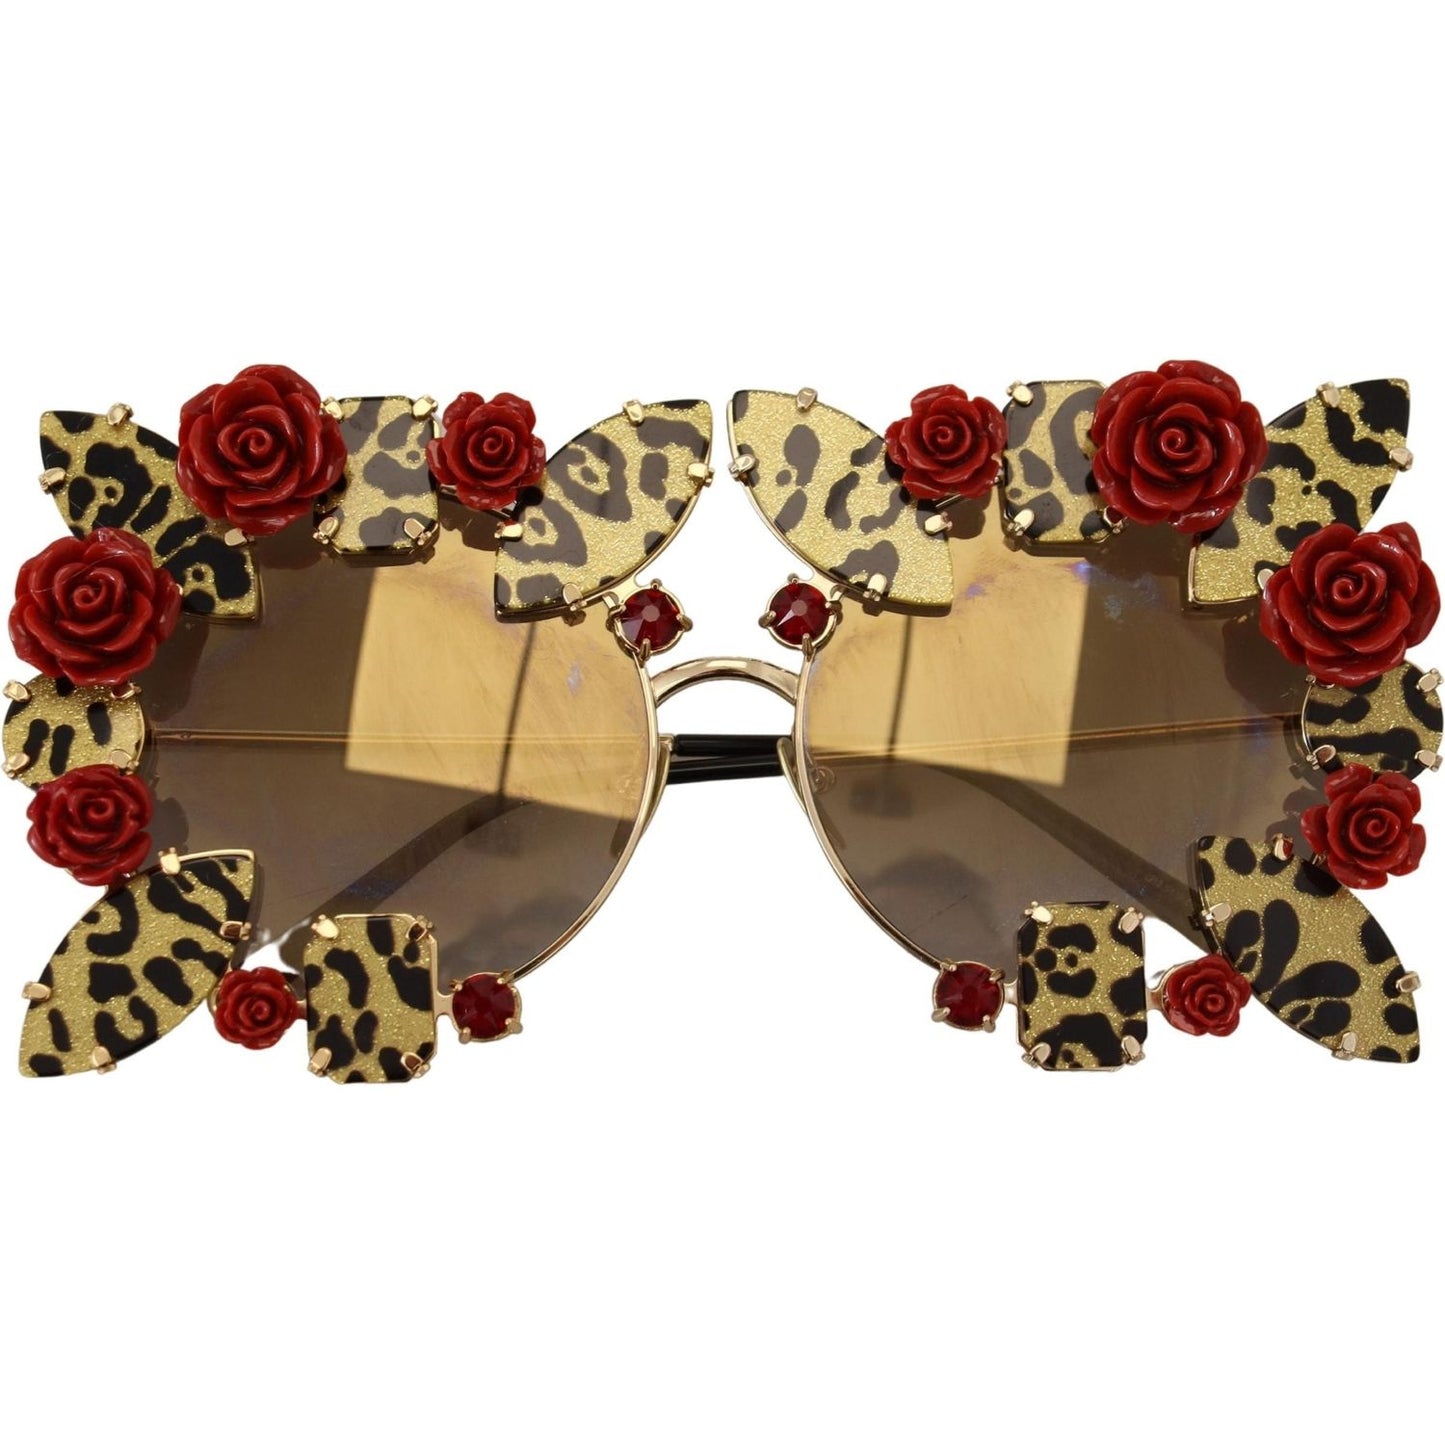 Dolce & Gabbana Elegant Round Rose-Embellished Sunglasses gold-metal-frame-roses-embellished-dg2207b-sunglasses IMG_1489-1-scaled-1b07b922-b35.jpg